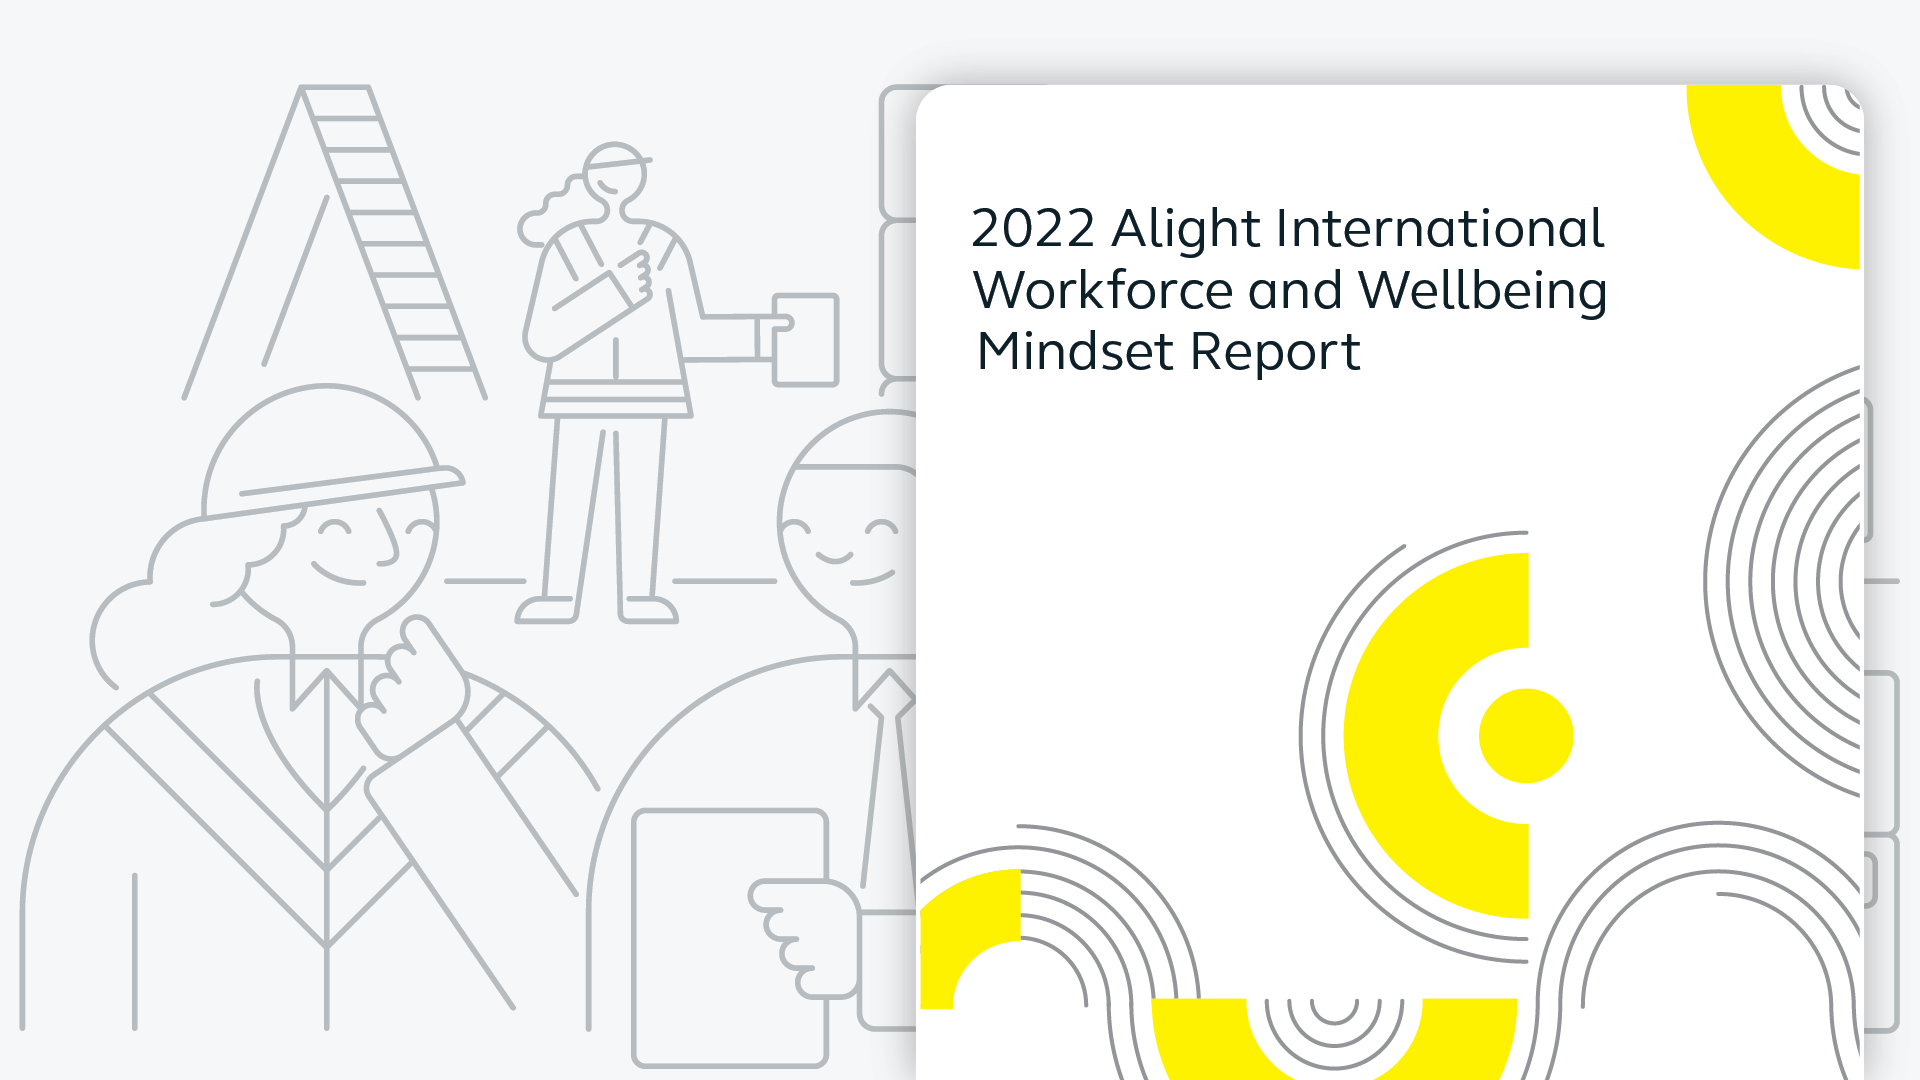  2022 Alight international workforce and wellbeing mindset